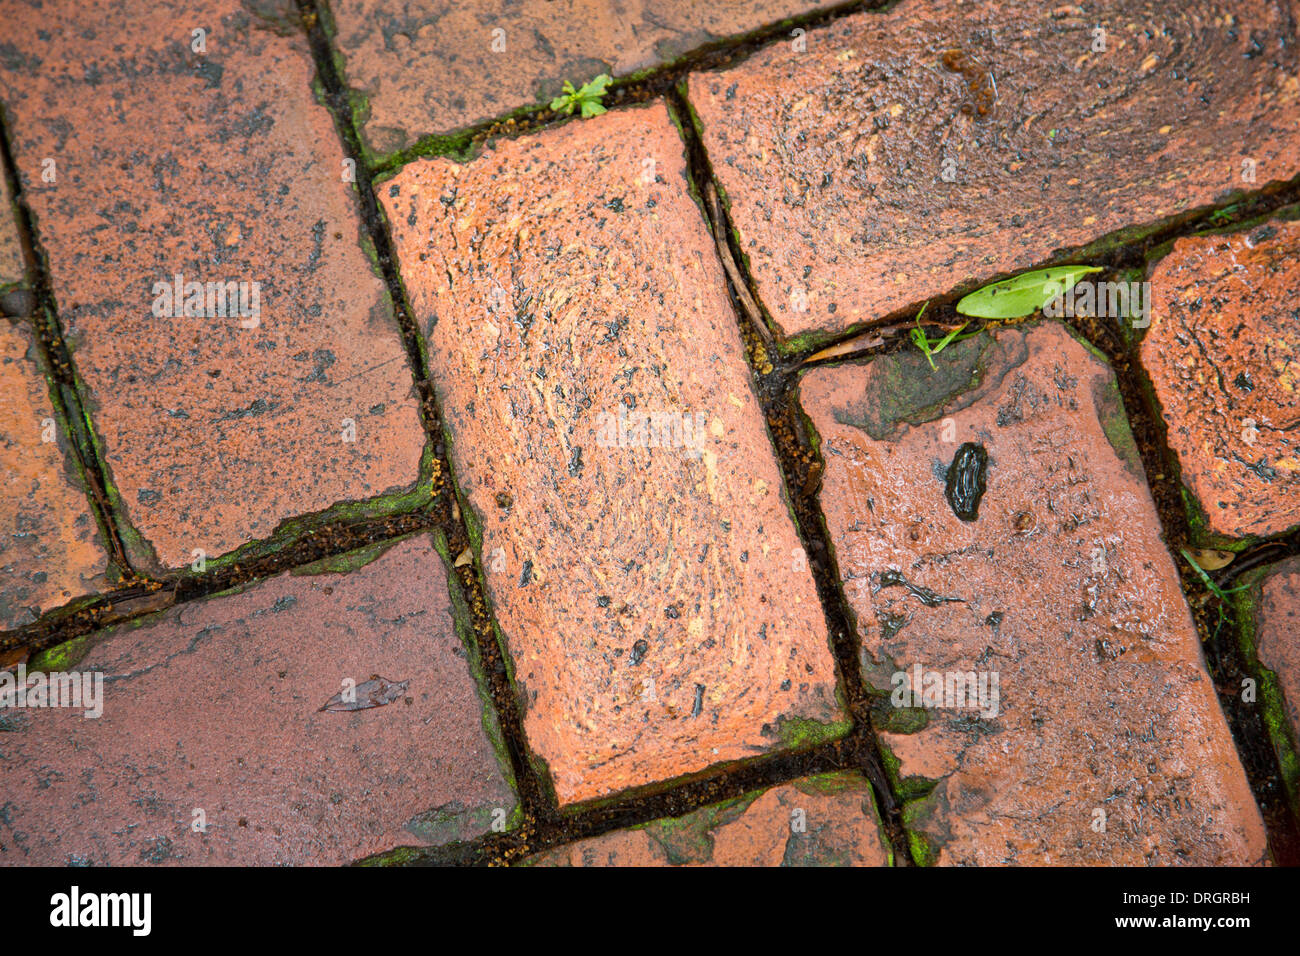 Detail of wet brick paving stones. Stock Photo